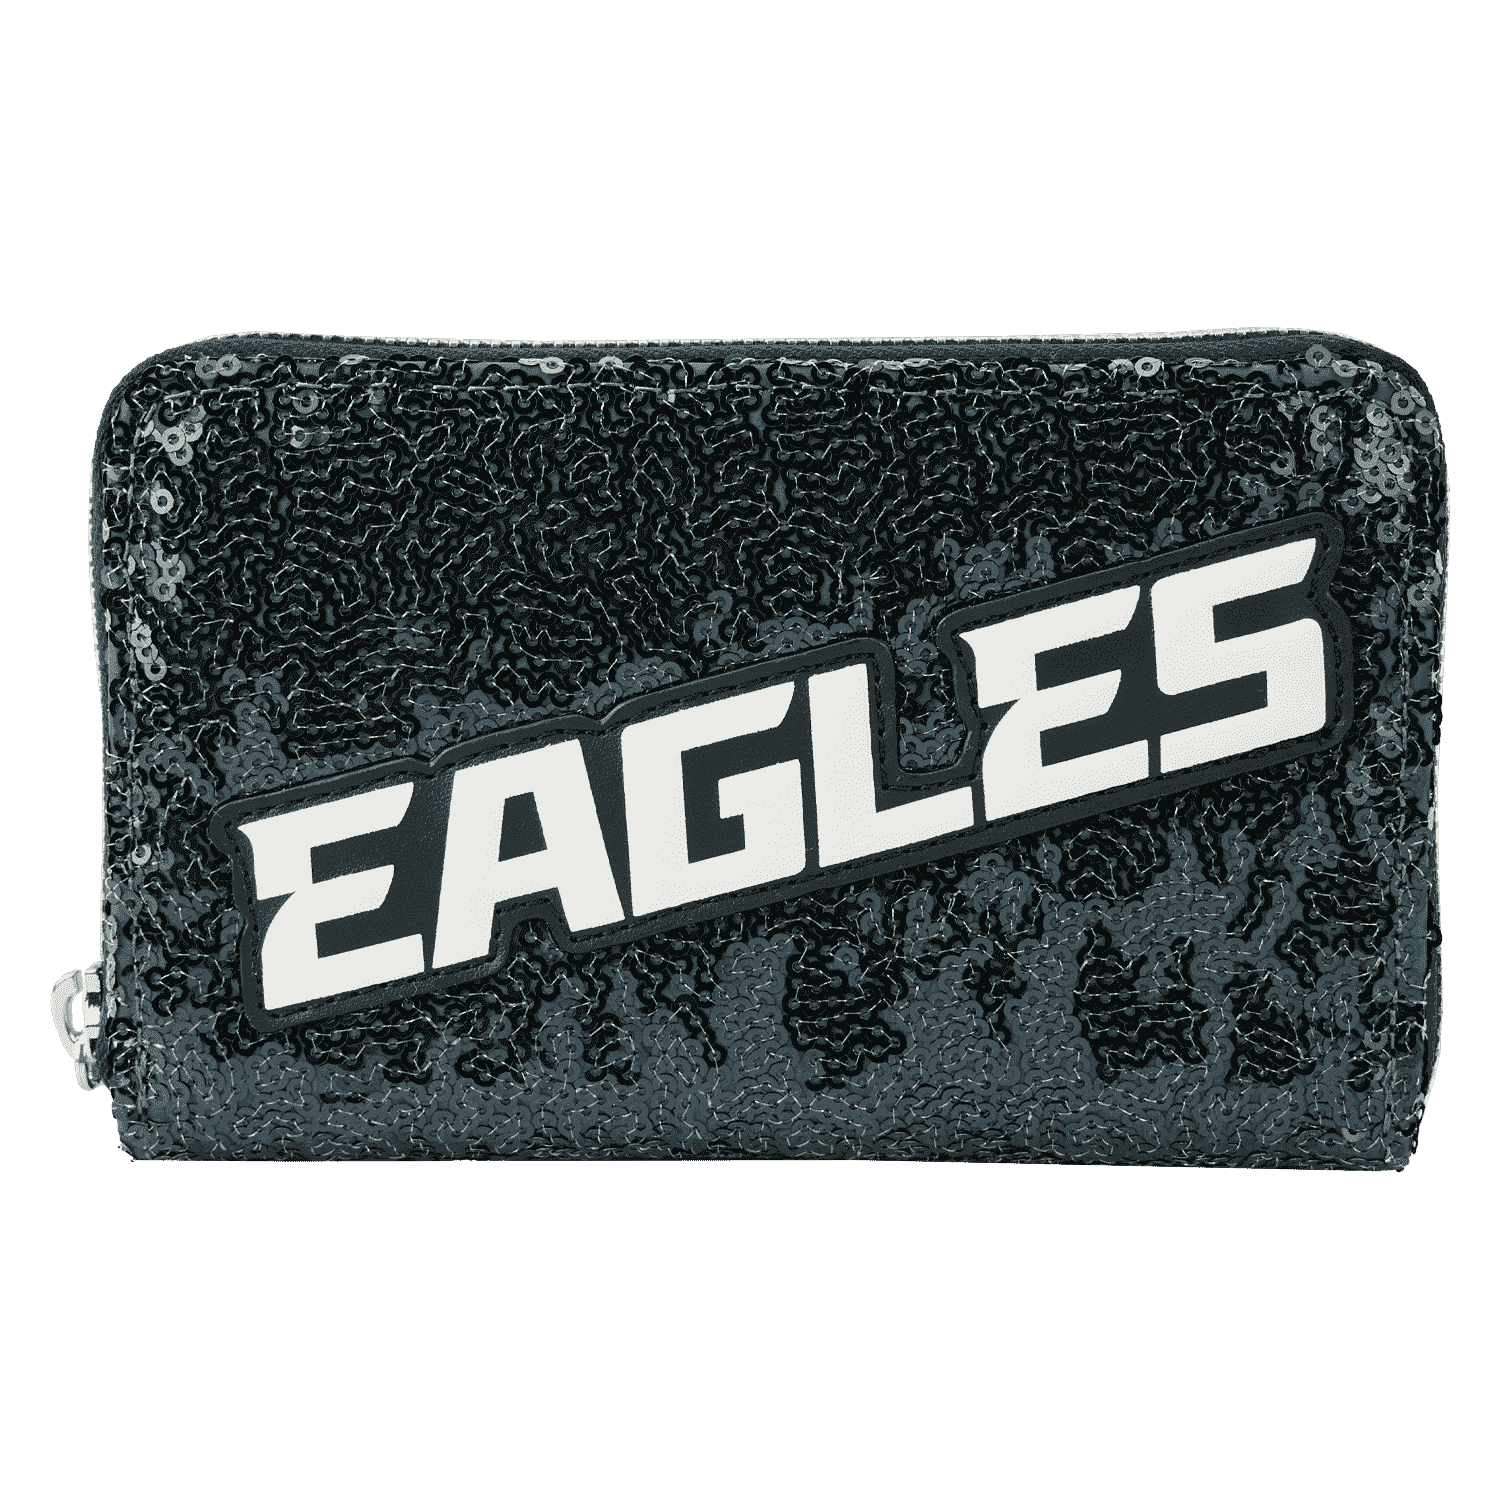 Philadelphia Eagles lanyard /ID holder